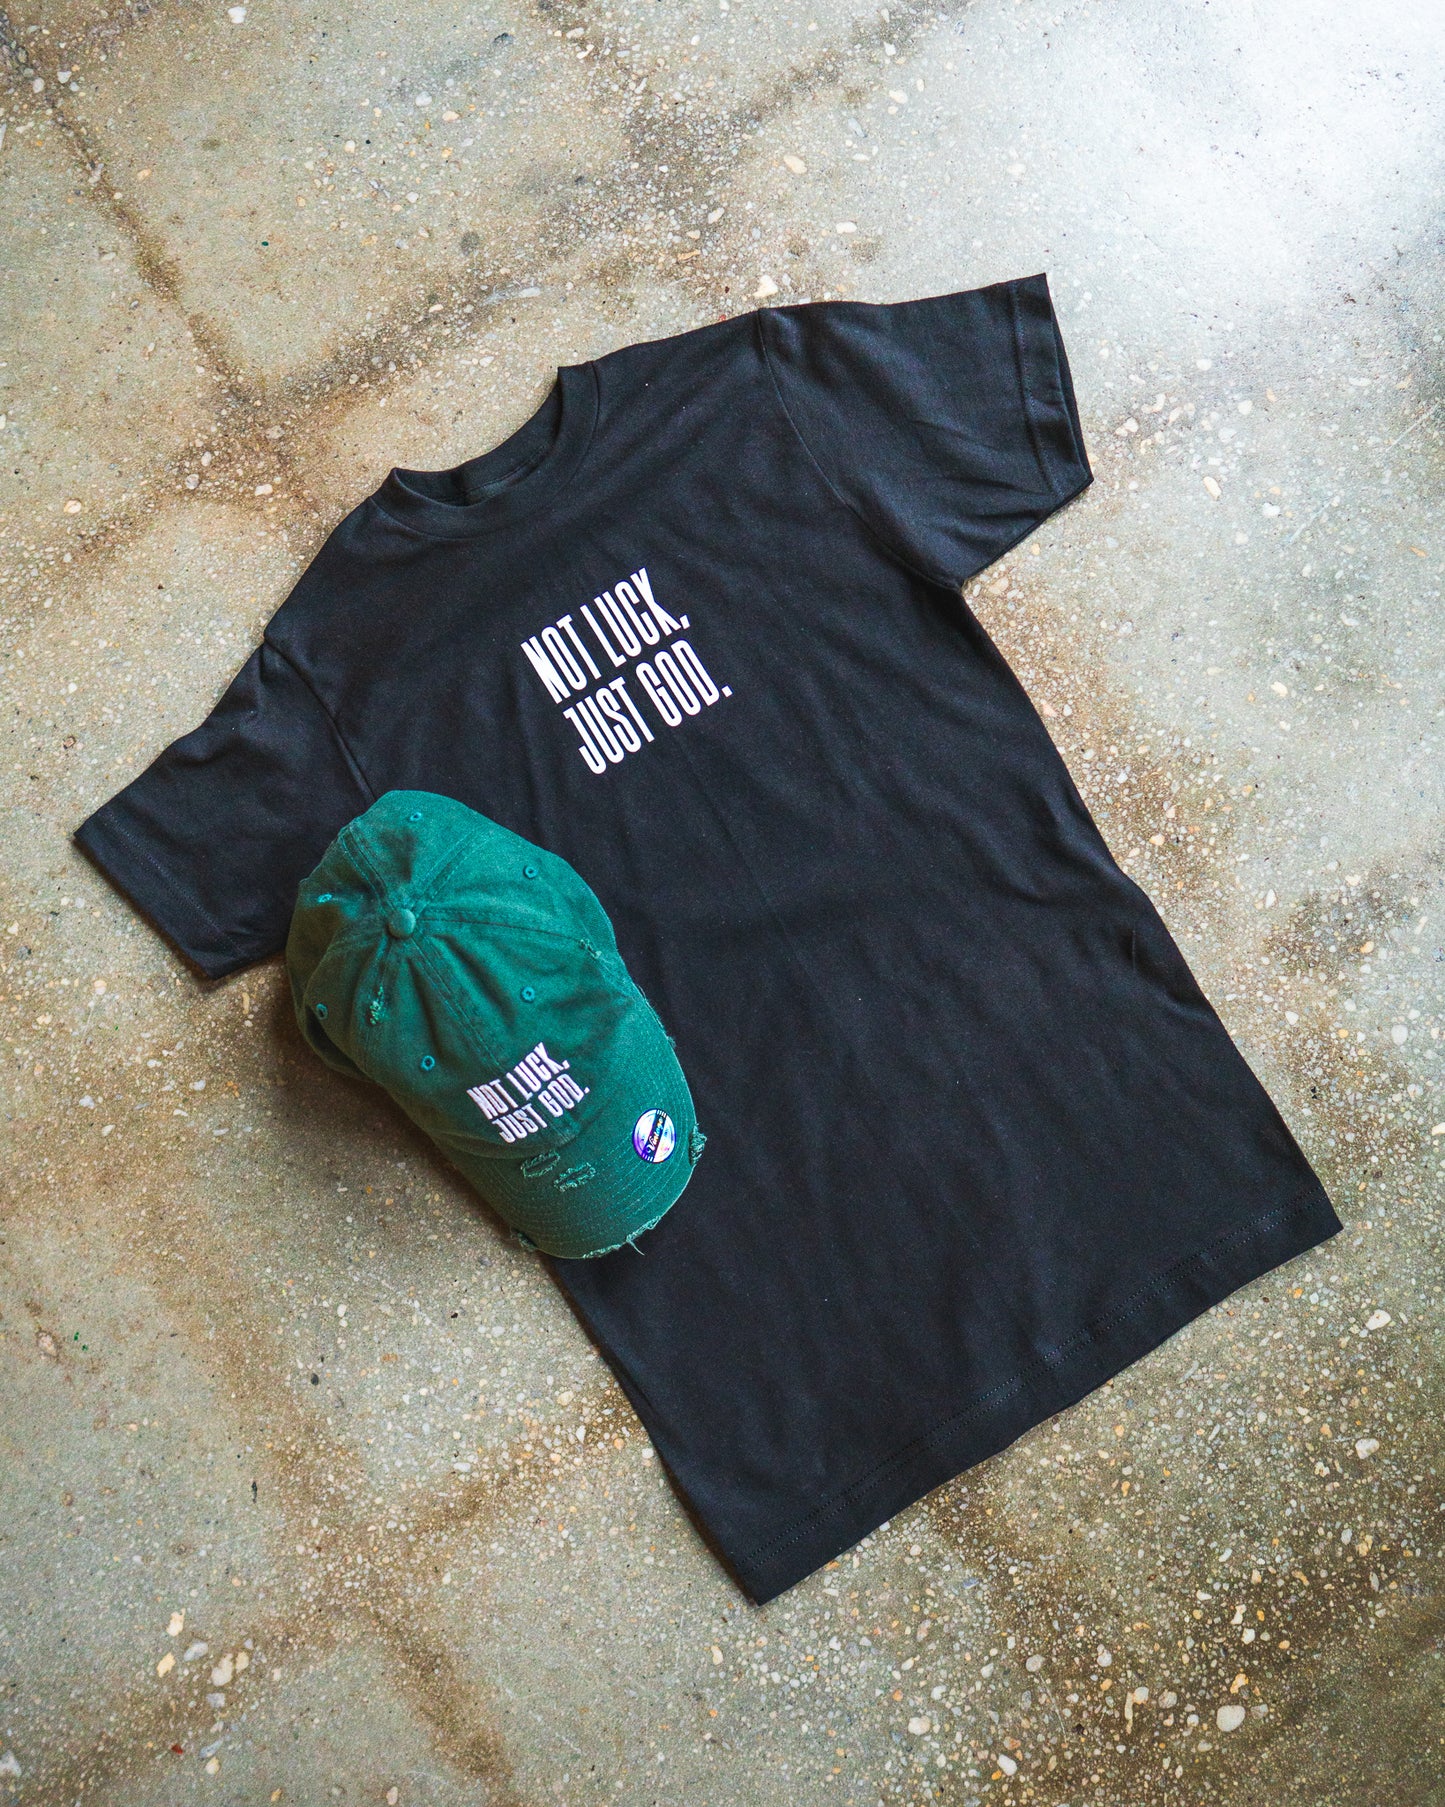 Not Luck, Just God Adult Box T-Shirt & Hunter Green Distressed Hat Bundle